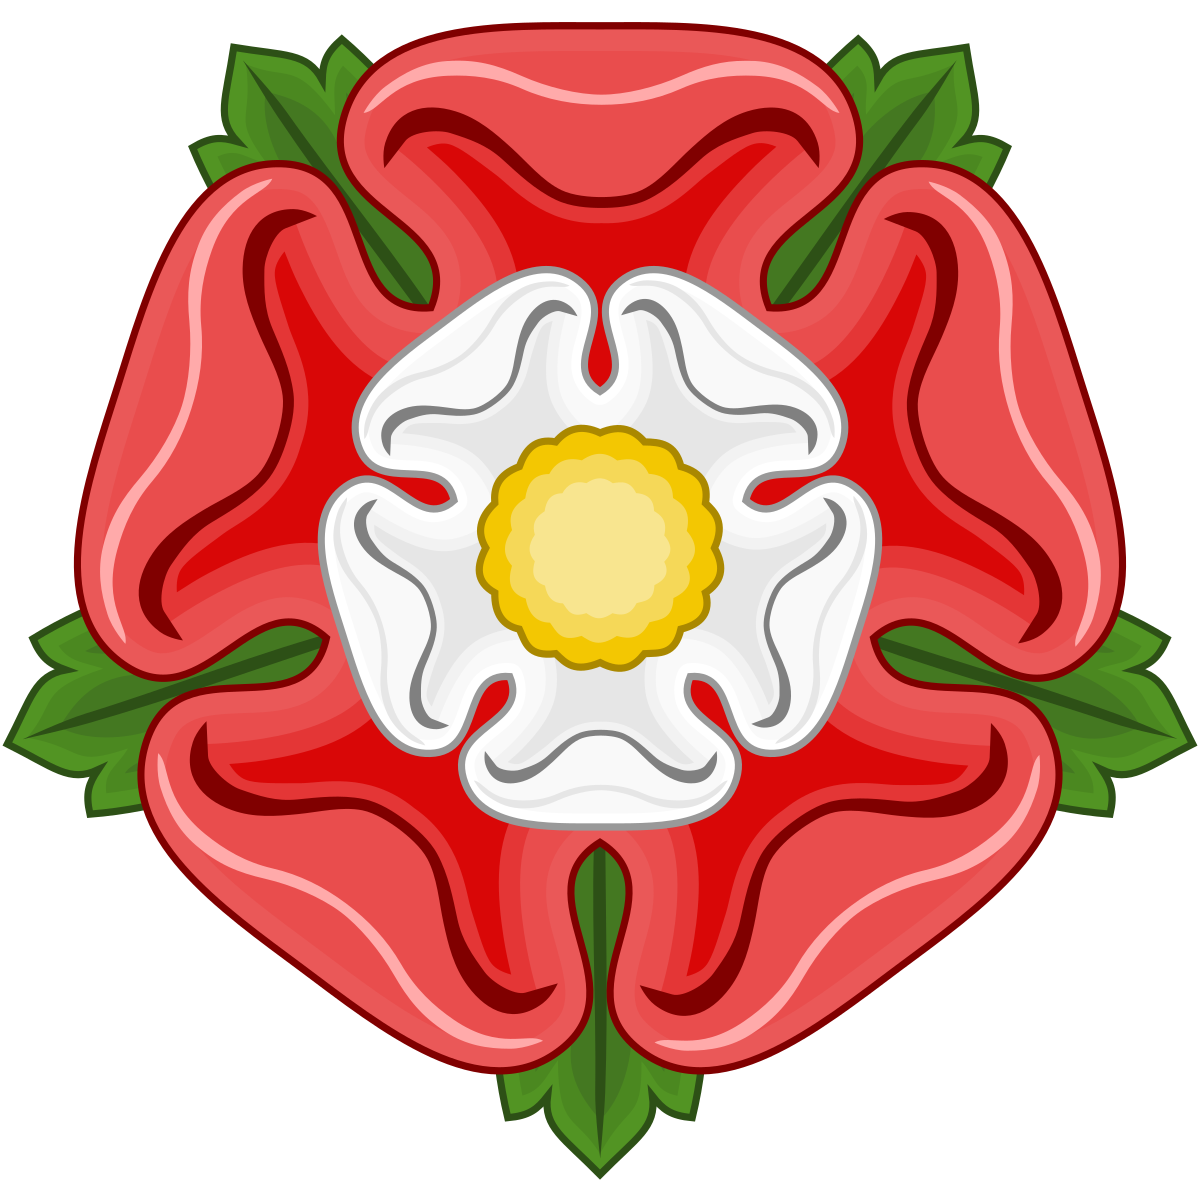 The Tudor Rose - An Iconic Emblem